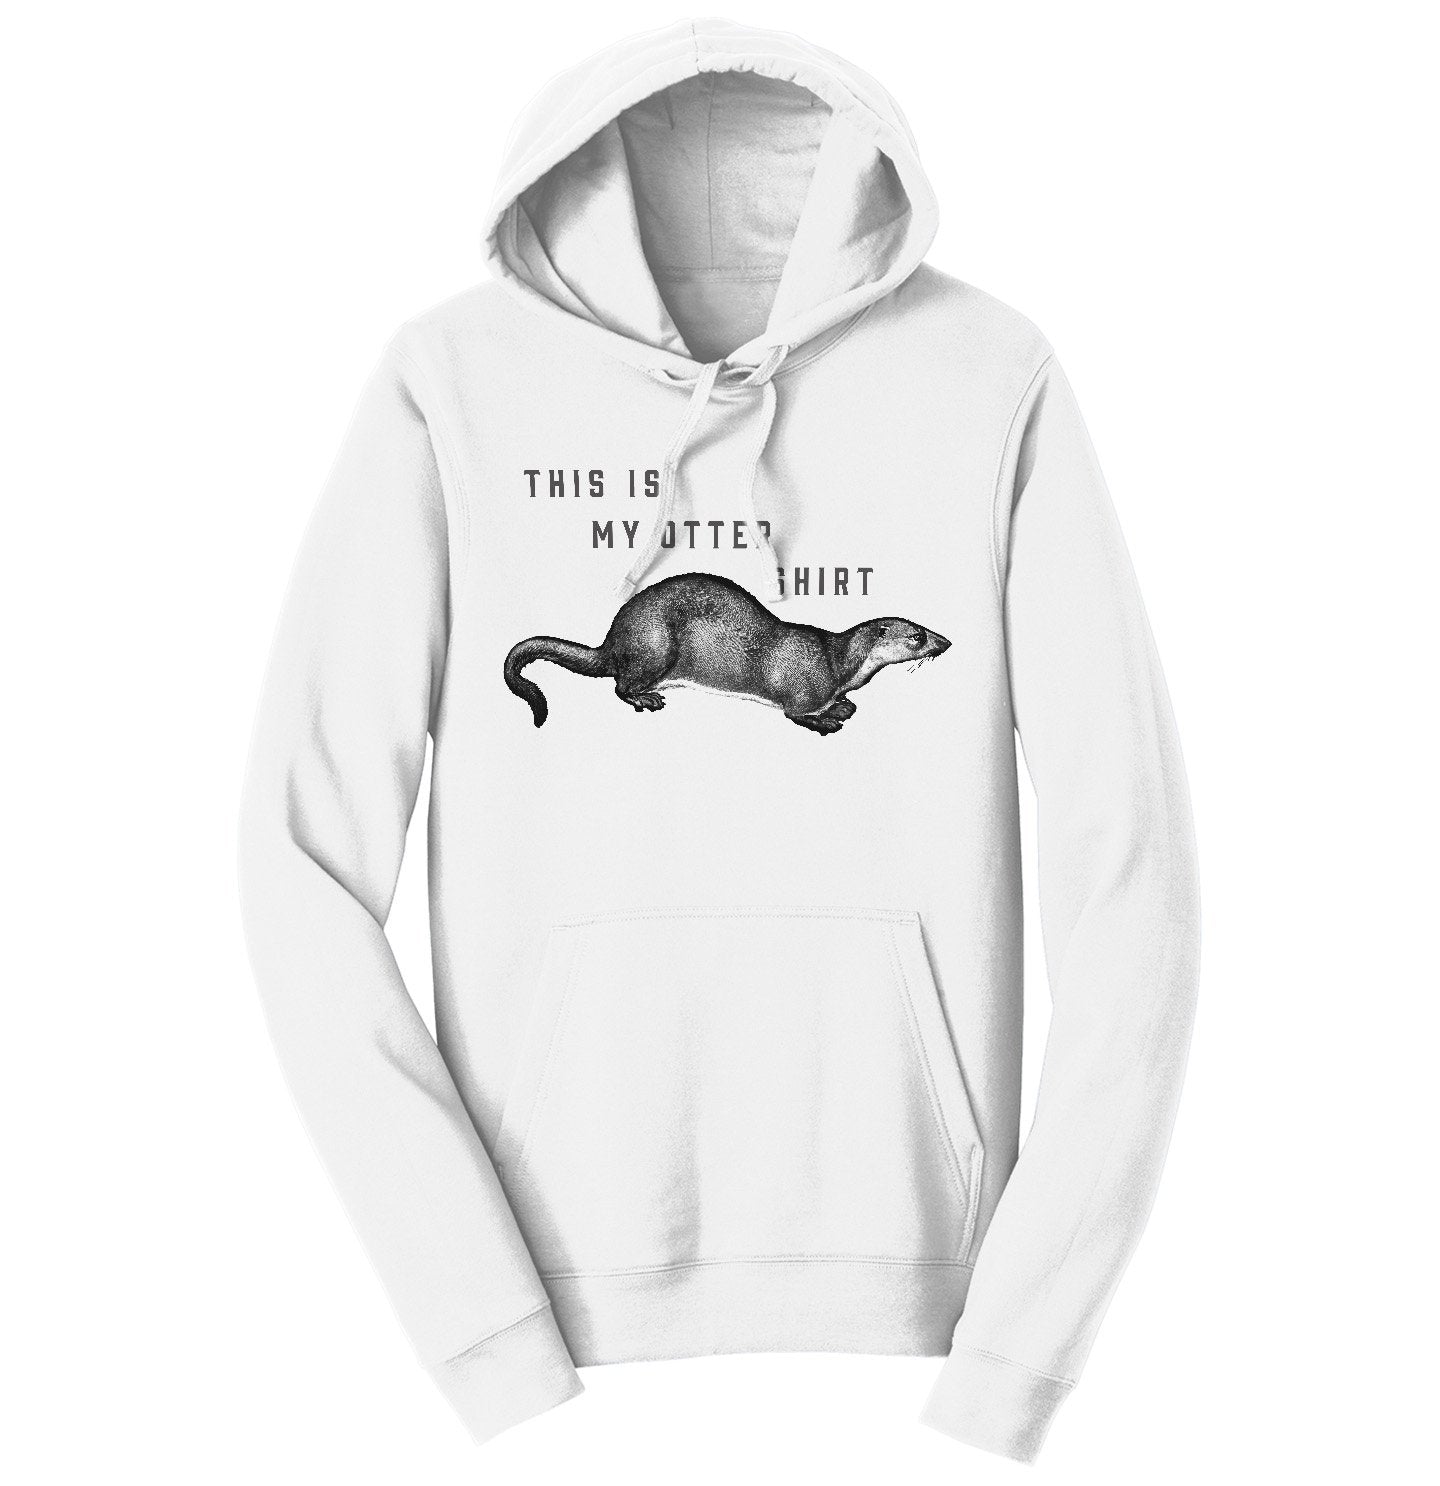 My Otter Shirt - Adult Unisex Hoodie Sweatshirt